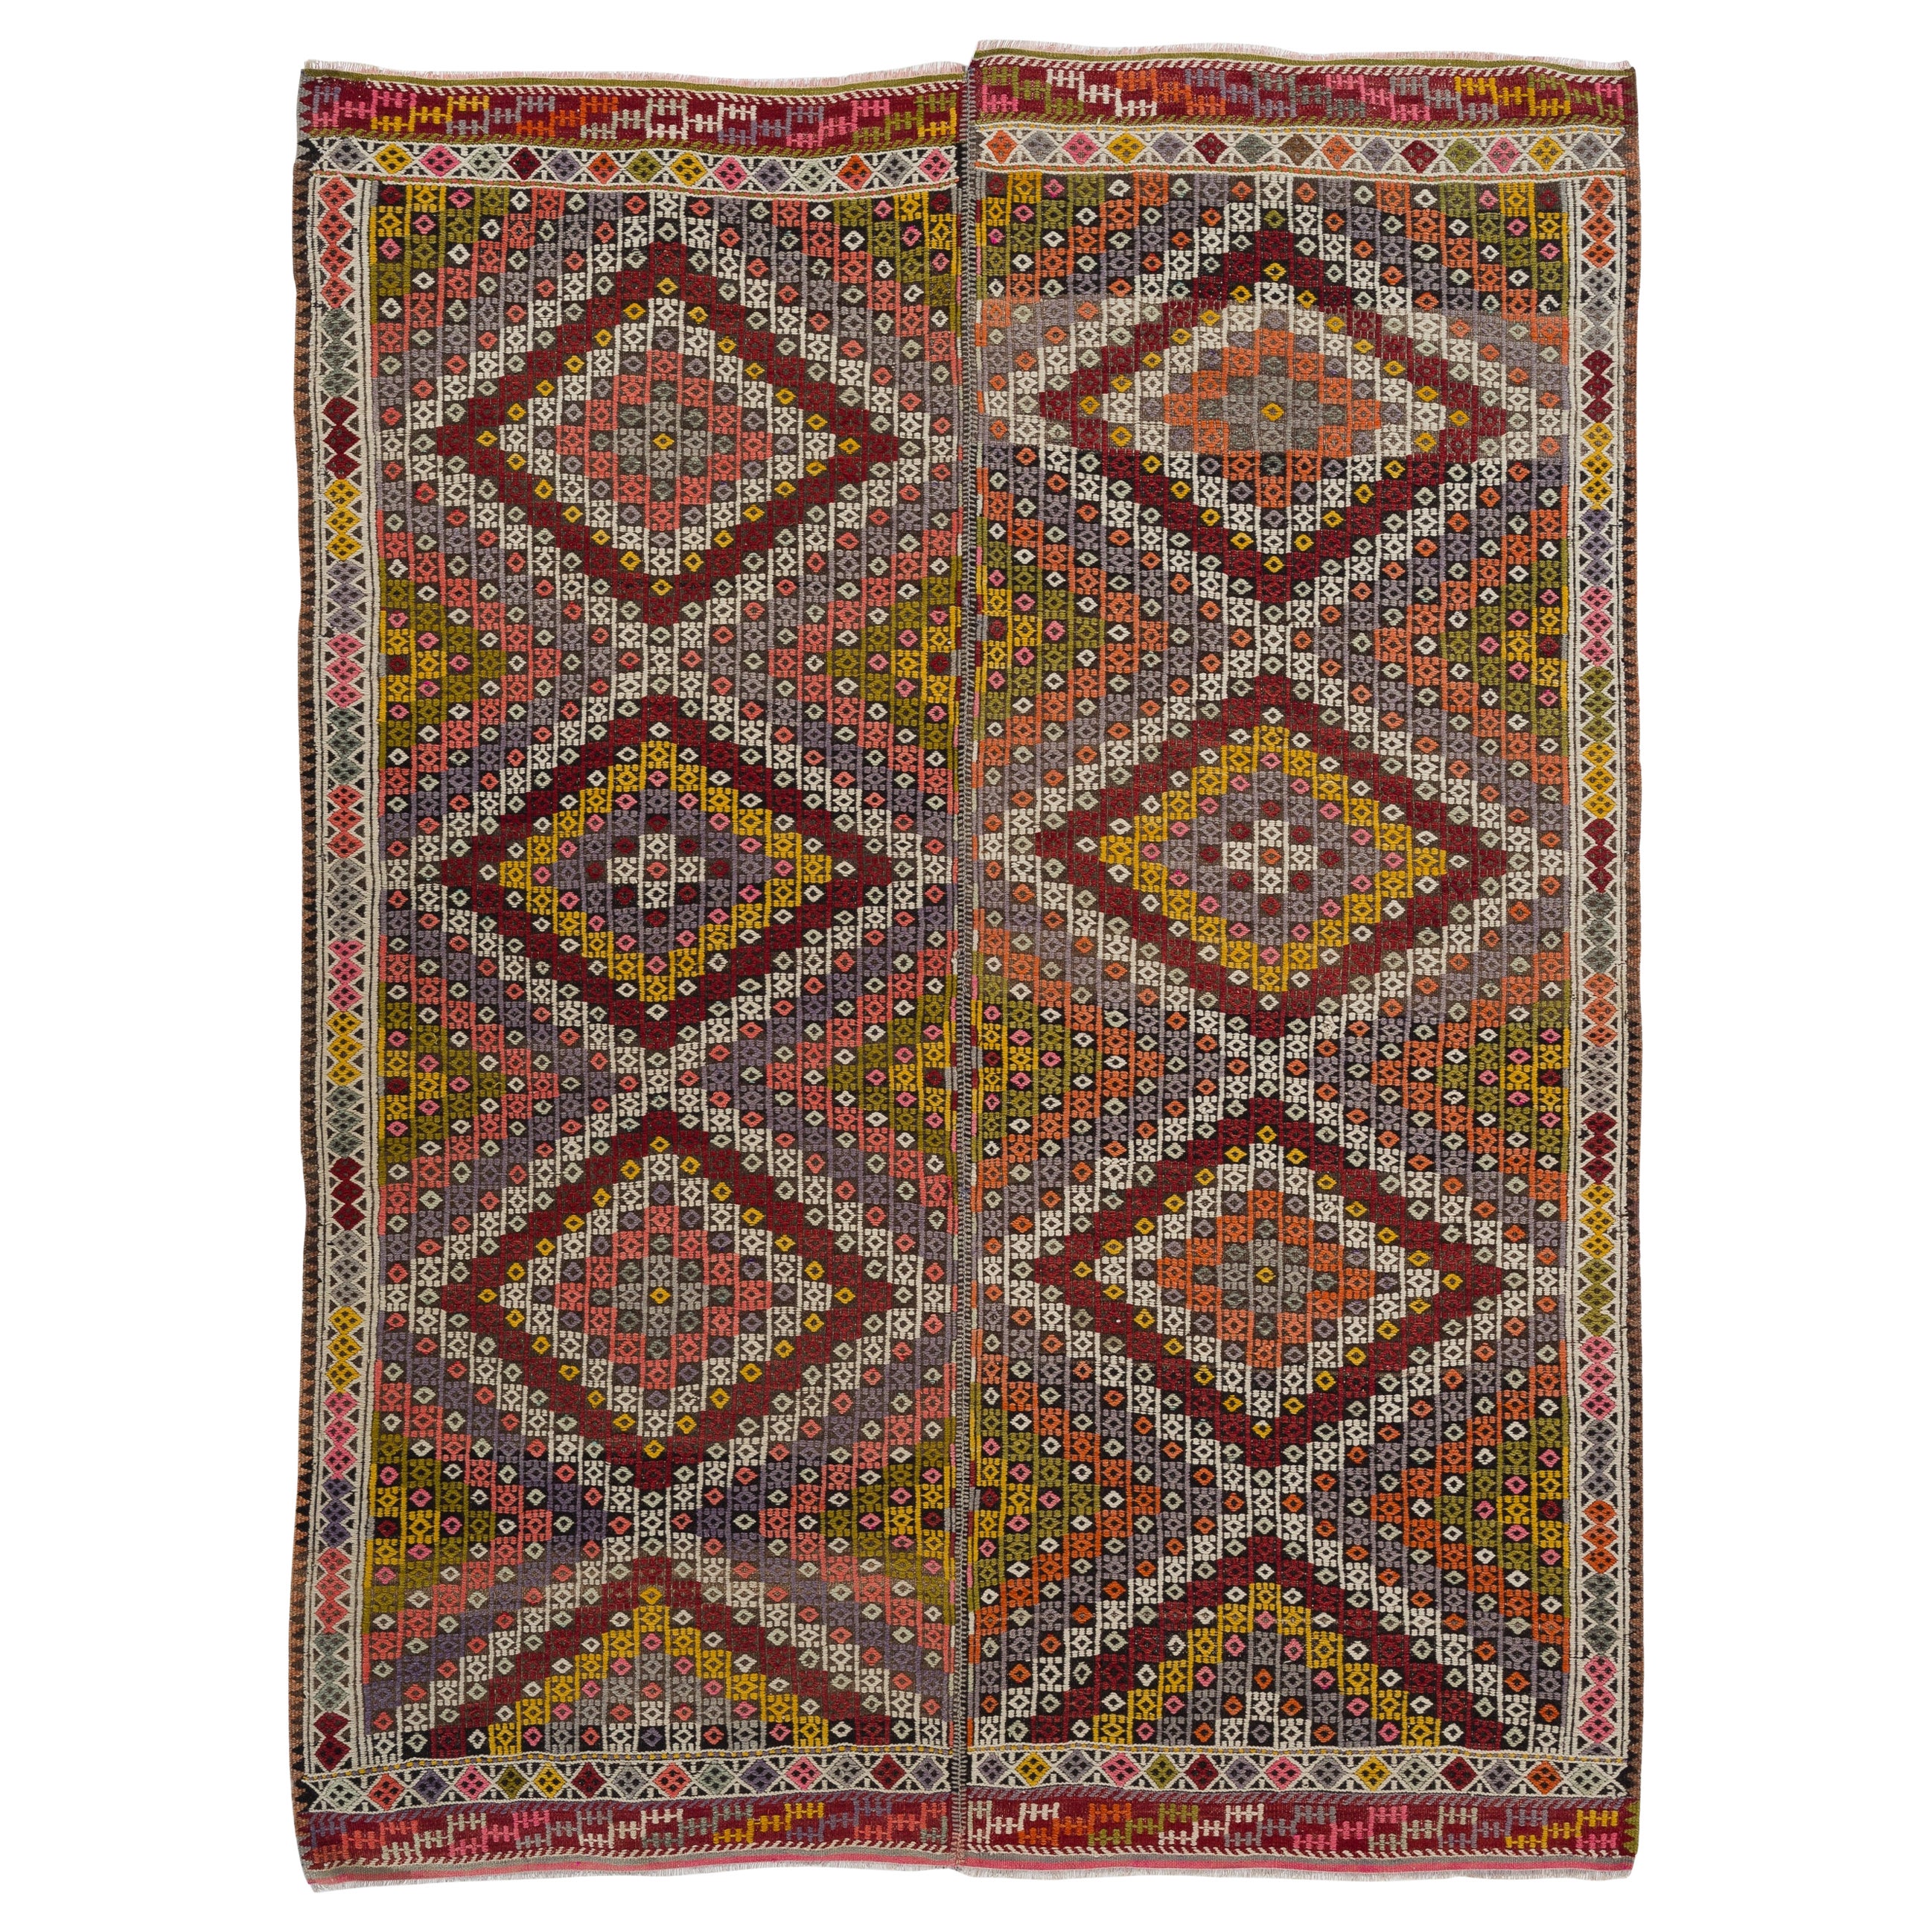 6x8 Ft Multicolored Hand-Woven Turkish Jijim Kilim. Vintage Geometric Design Rug For Sale